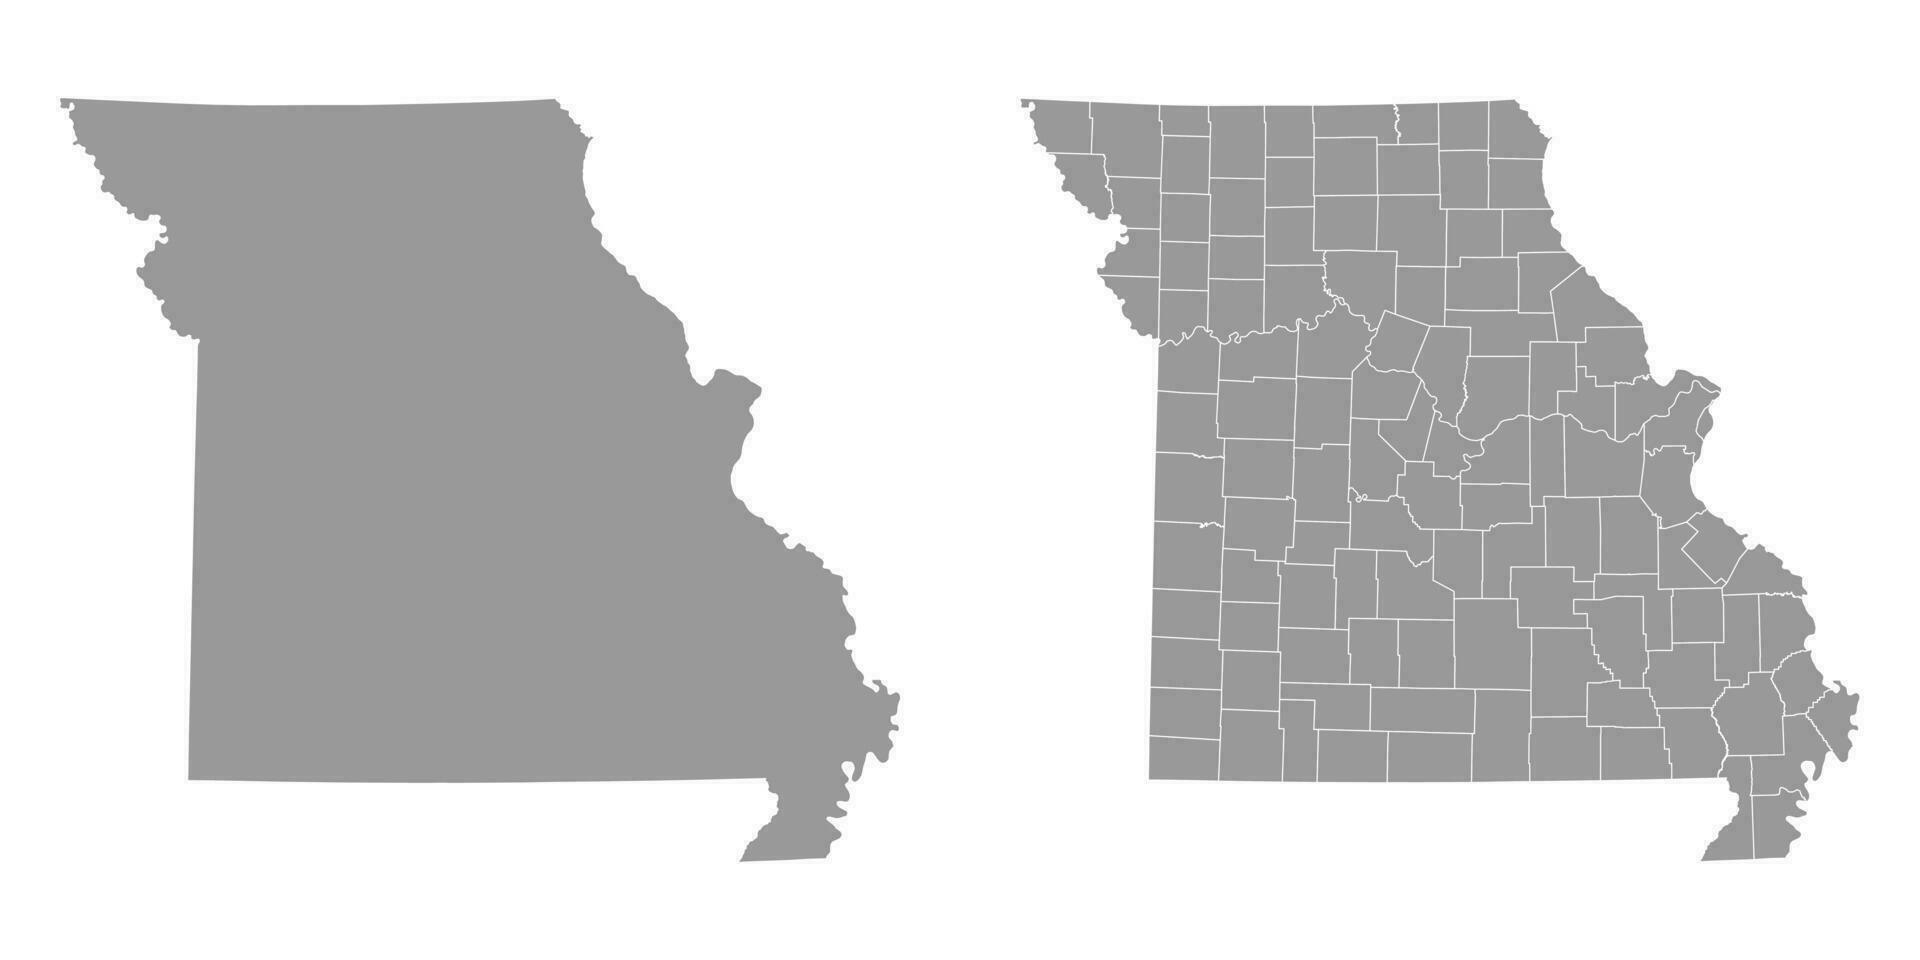 Missouri state gray maps. Vector illustration.